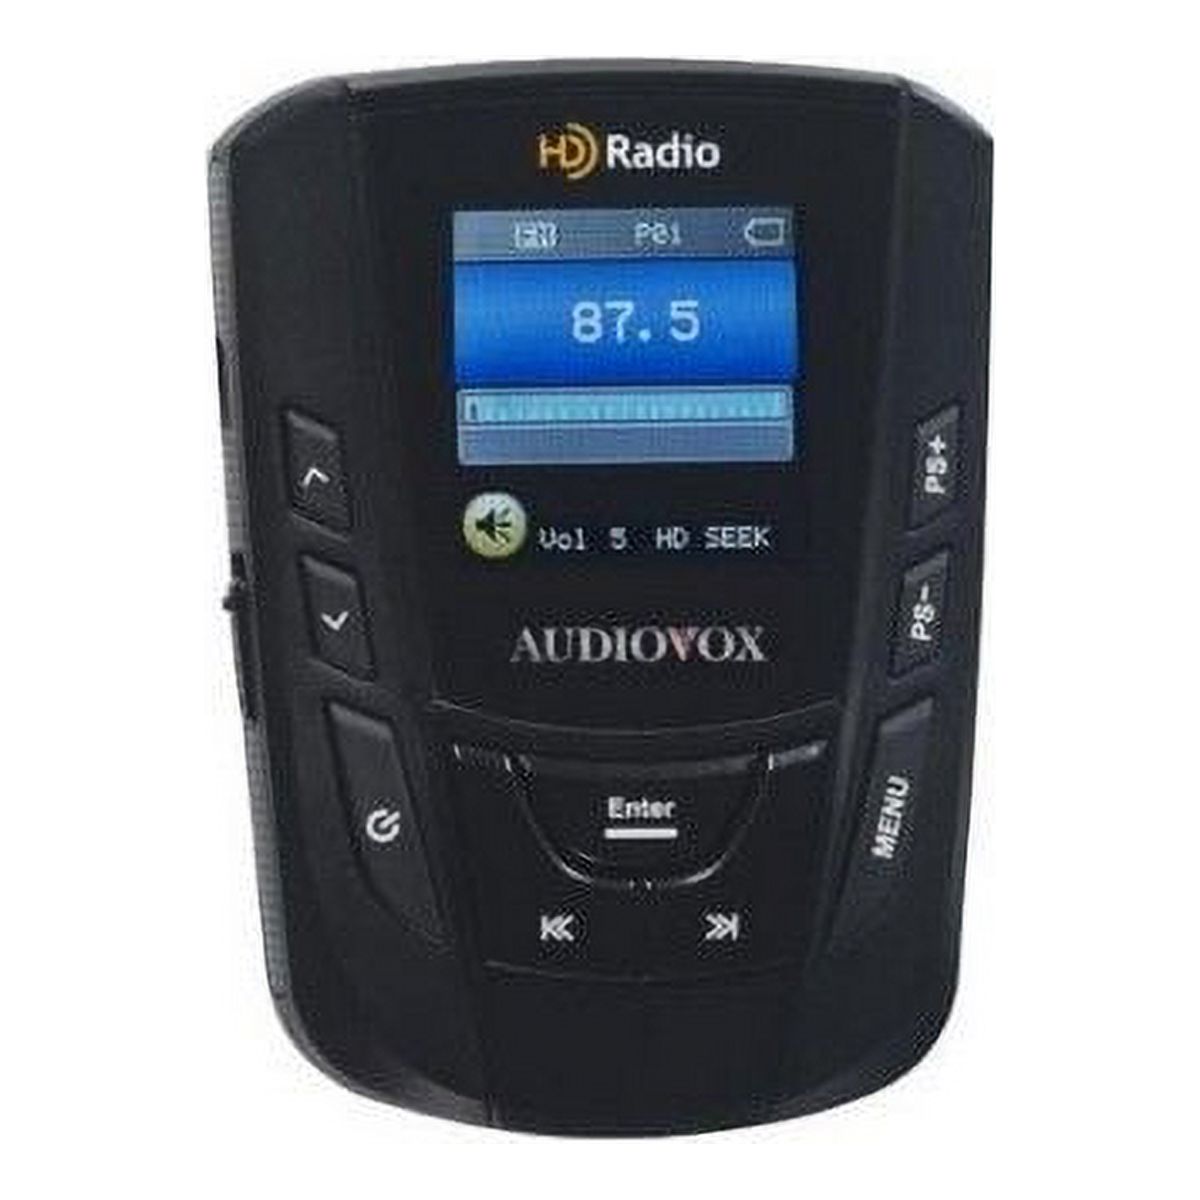 Brand New Audiovox Electronics 80-8600 Portable Hd Radio - image 1 of 1